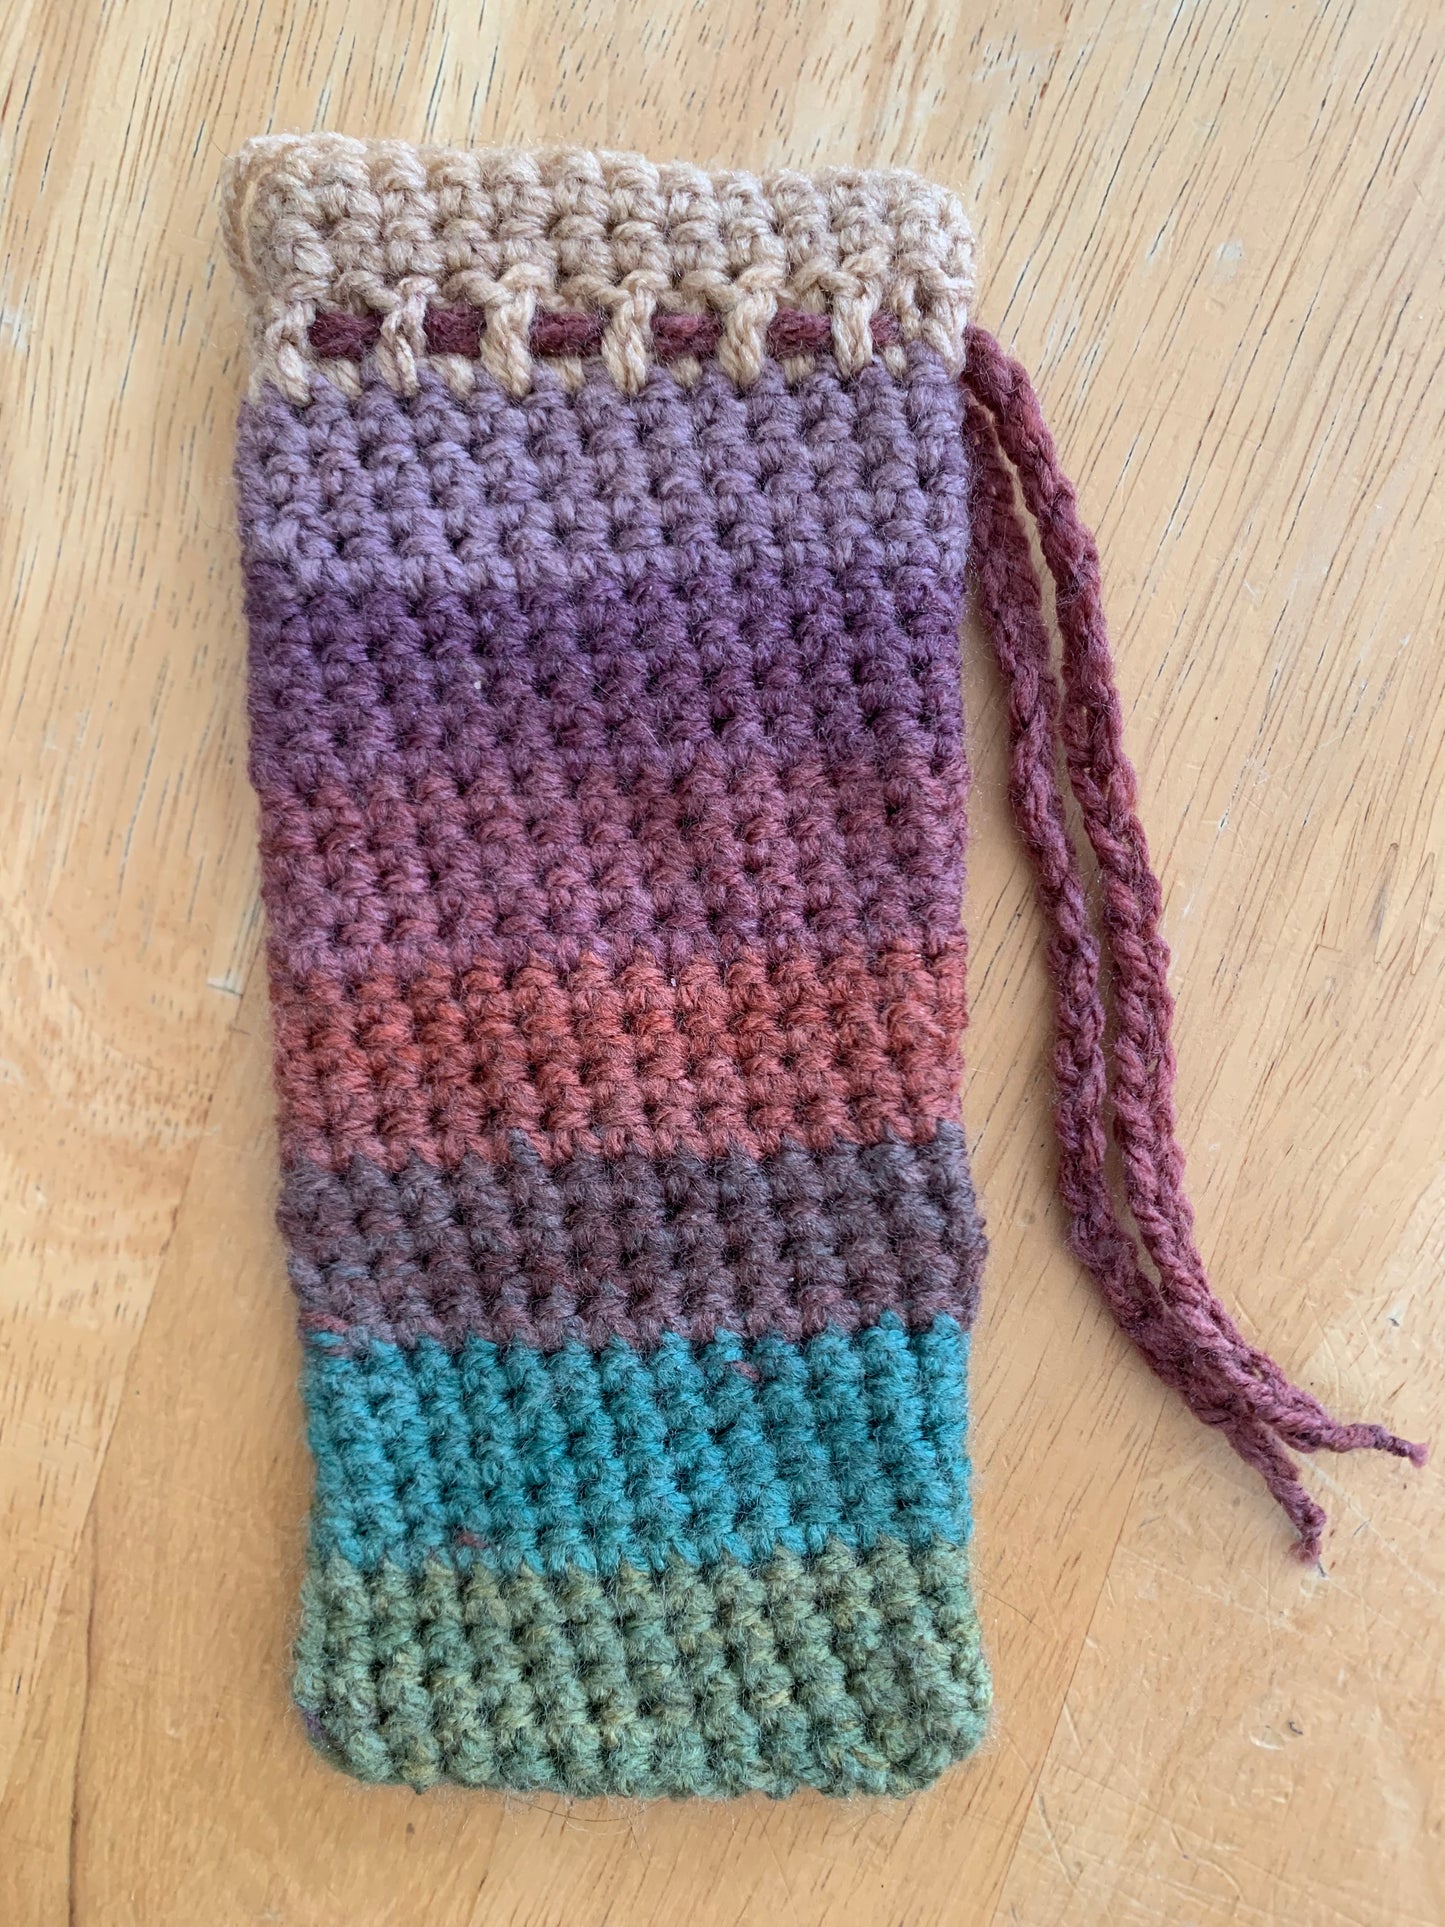 Crochet Item Request